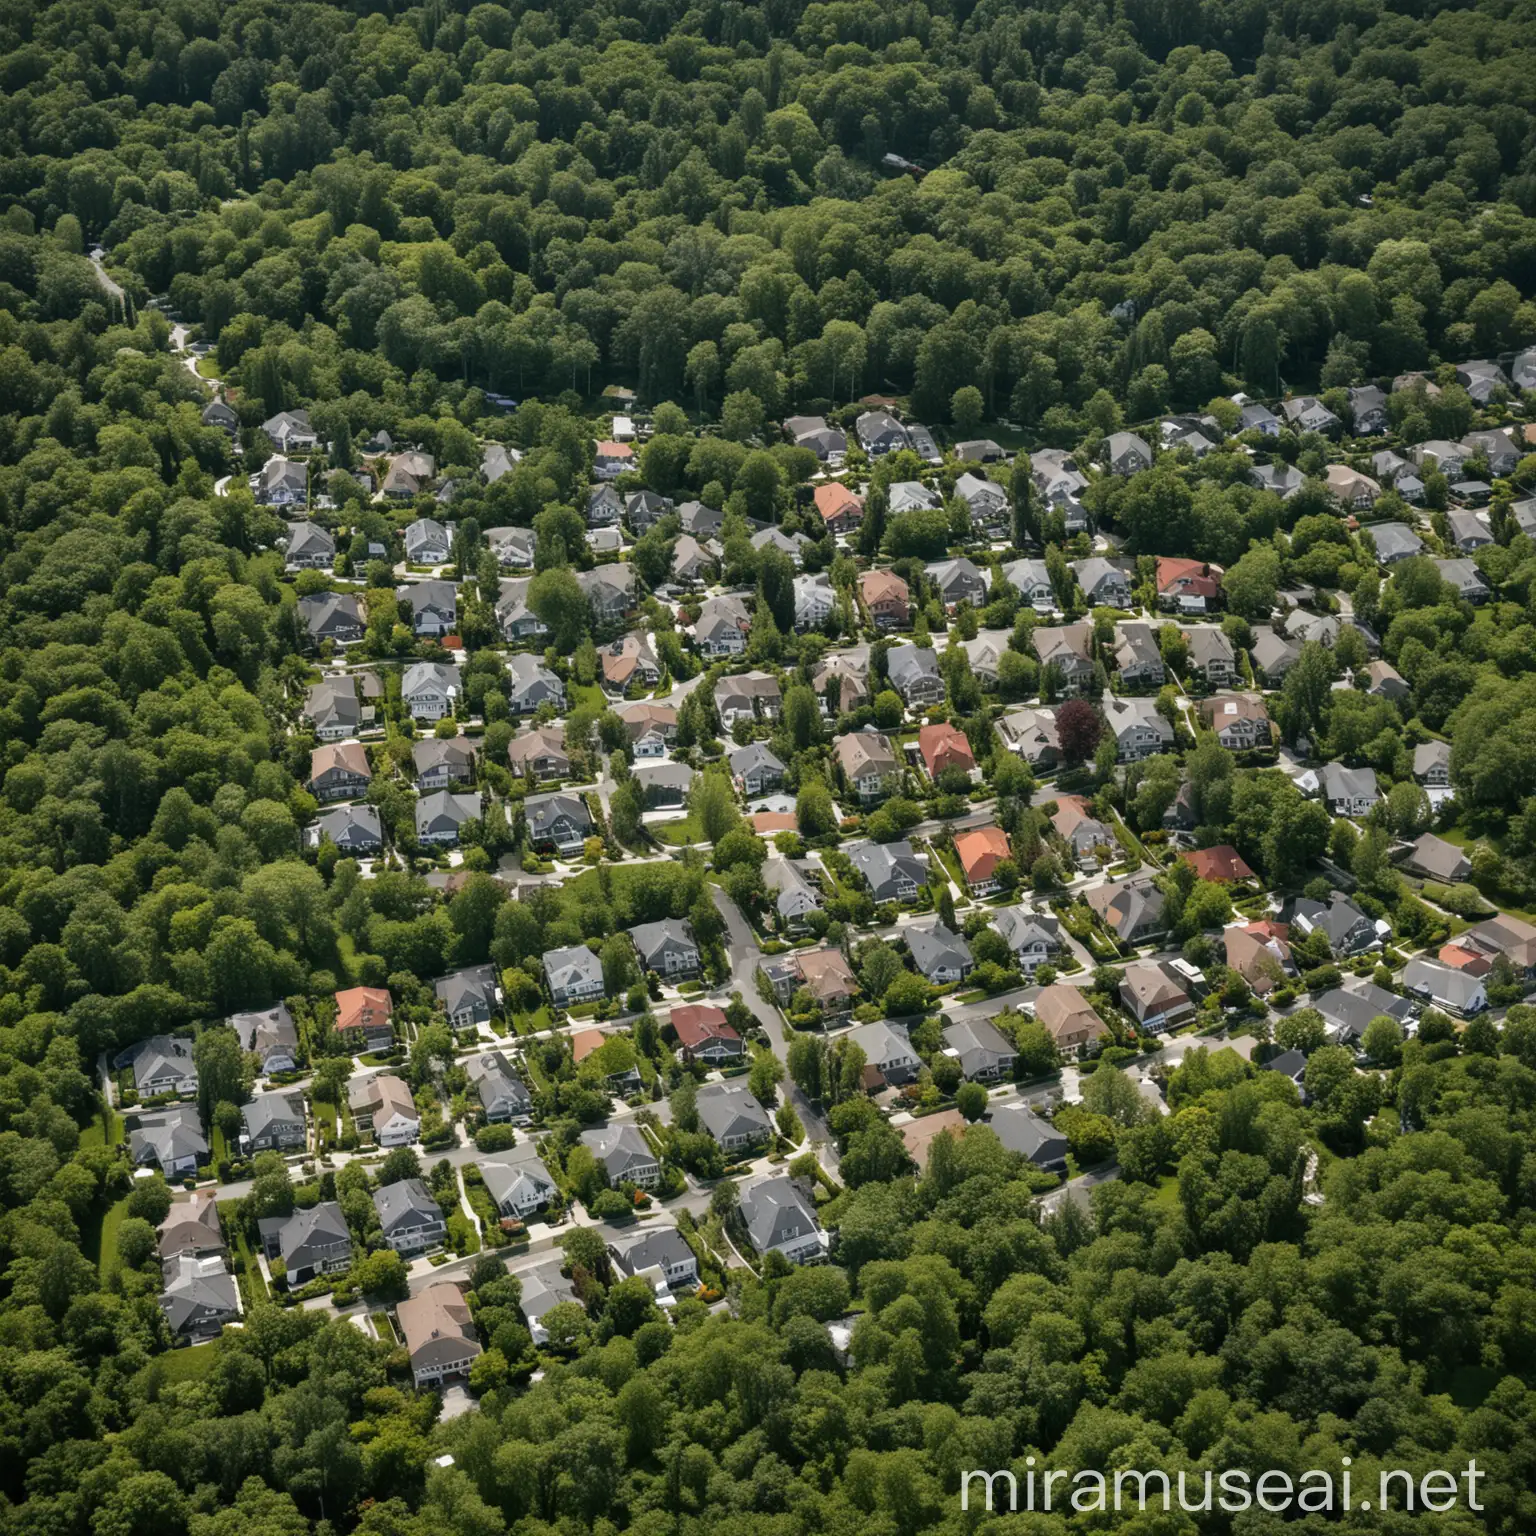 suburban neighborhood characterized by lush greenery and tranquil surroundings
